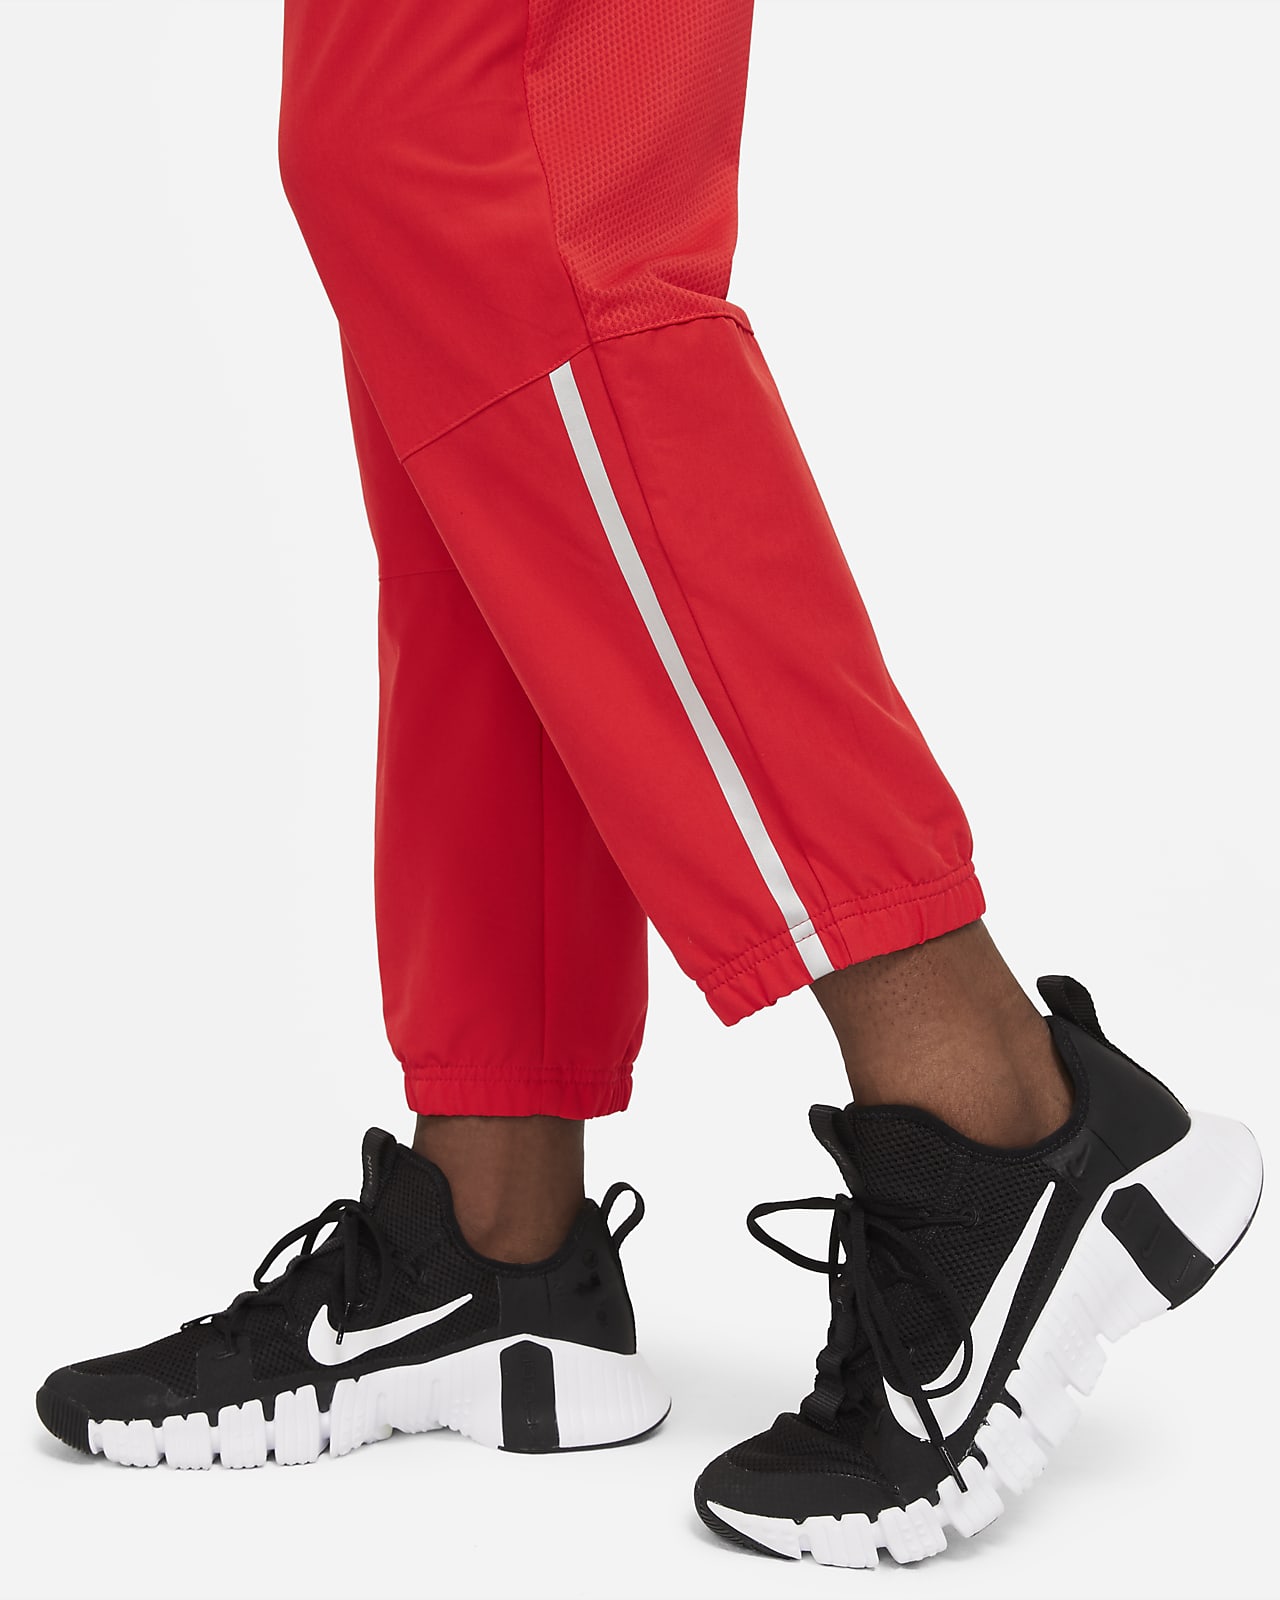 Nike Pro Women's Woven Pants. Nike.com